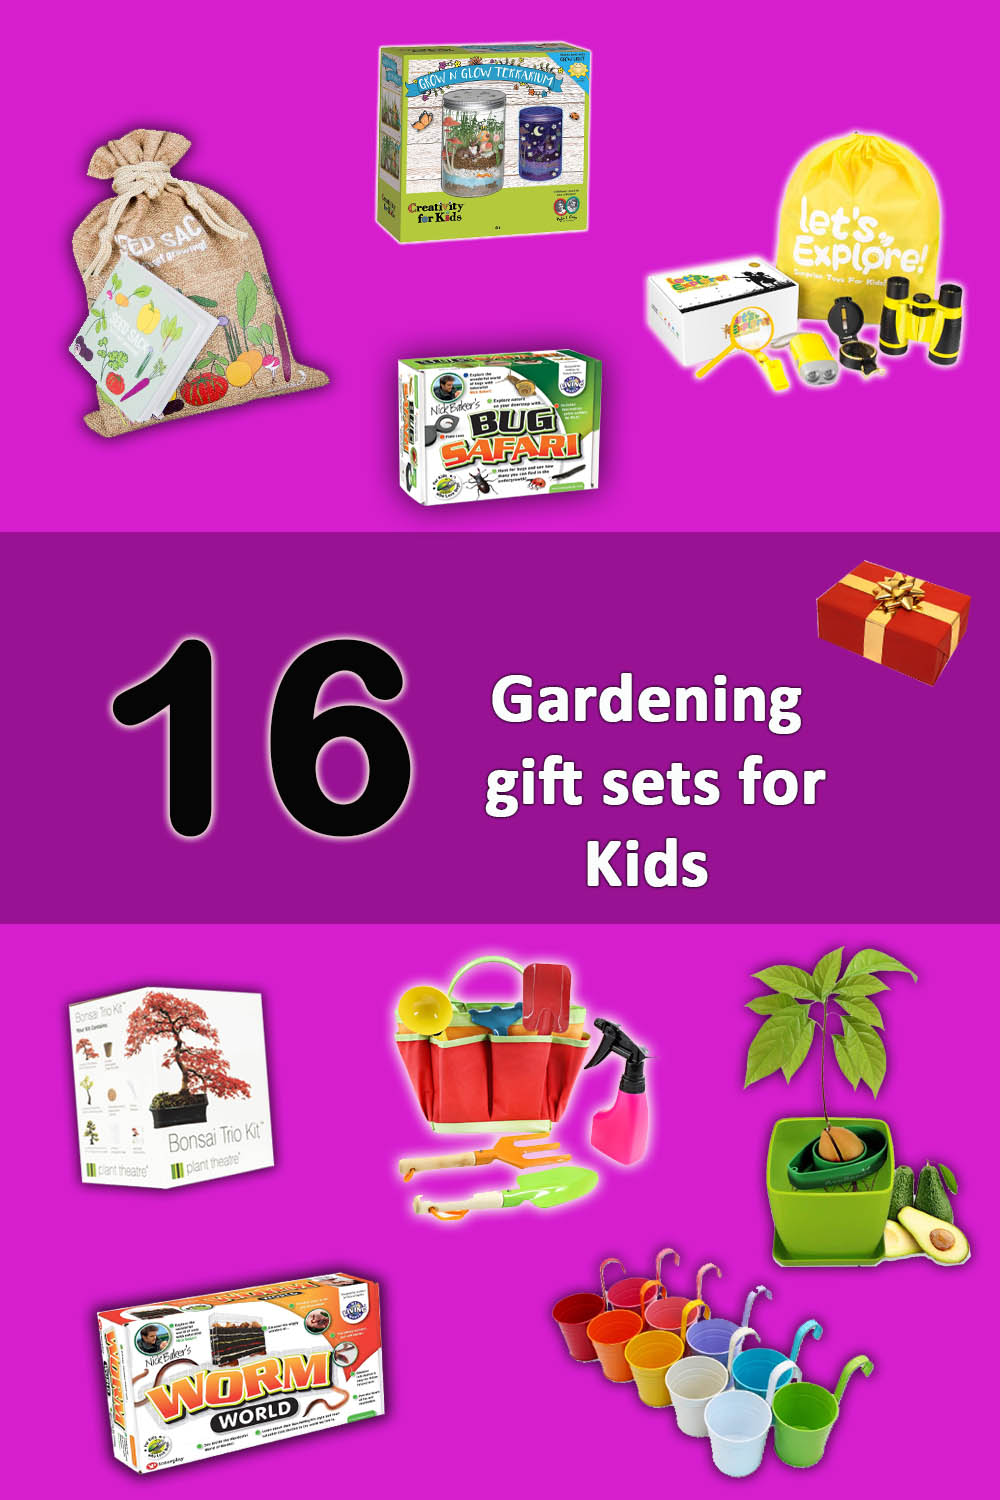 Children's gardening kits and gift sets